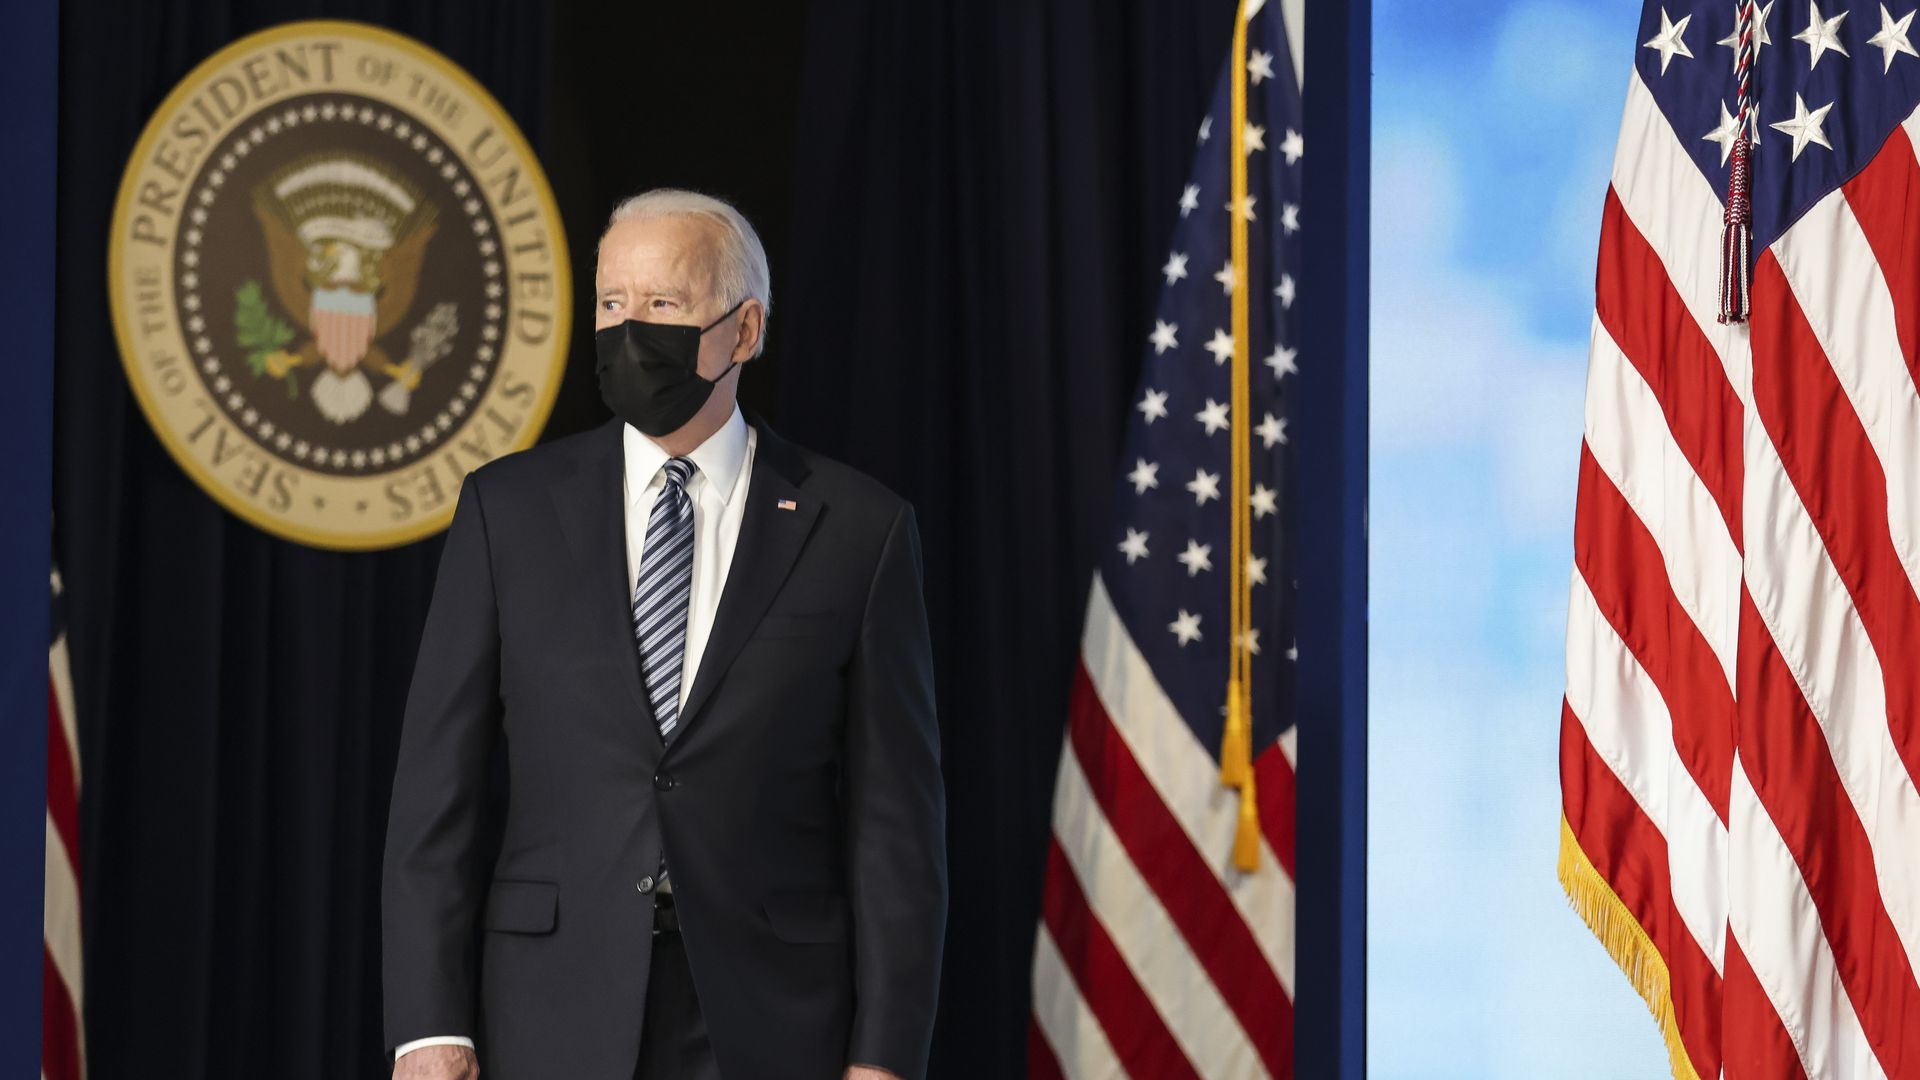 President Biden is seen arriving for an event on Wednesday.